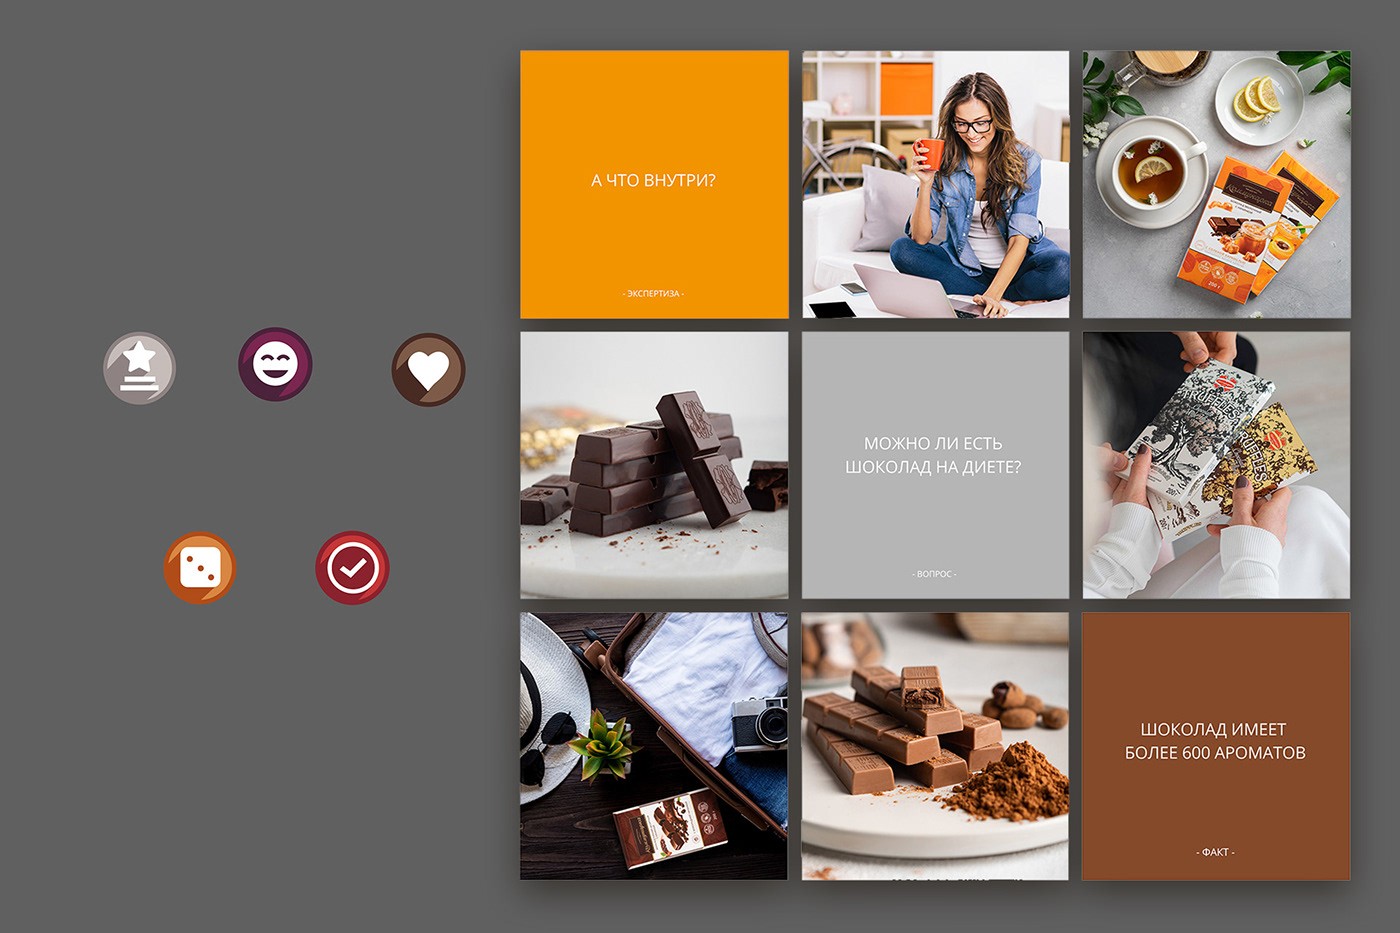 chocolate marketing   positivity Promotion smm design social media Socialmedia design Social media post